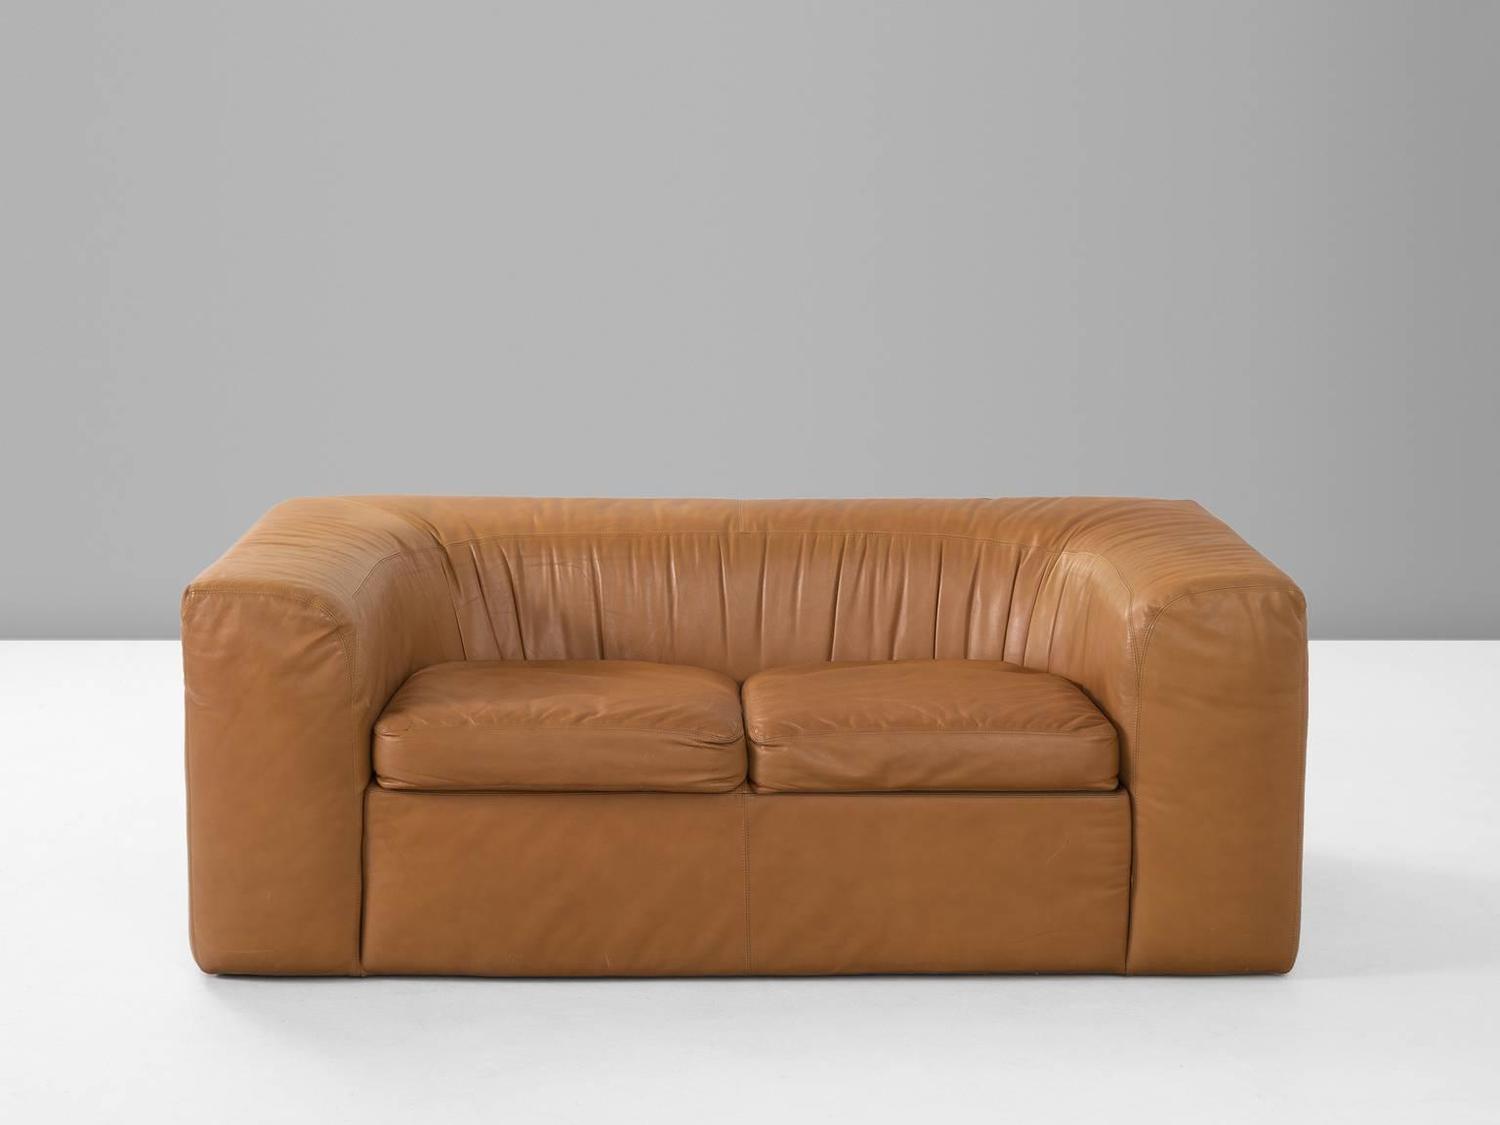 Cognac Leather Living Room Set For Sale at 1stdibs